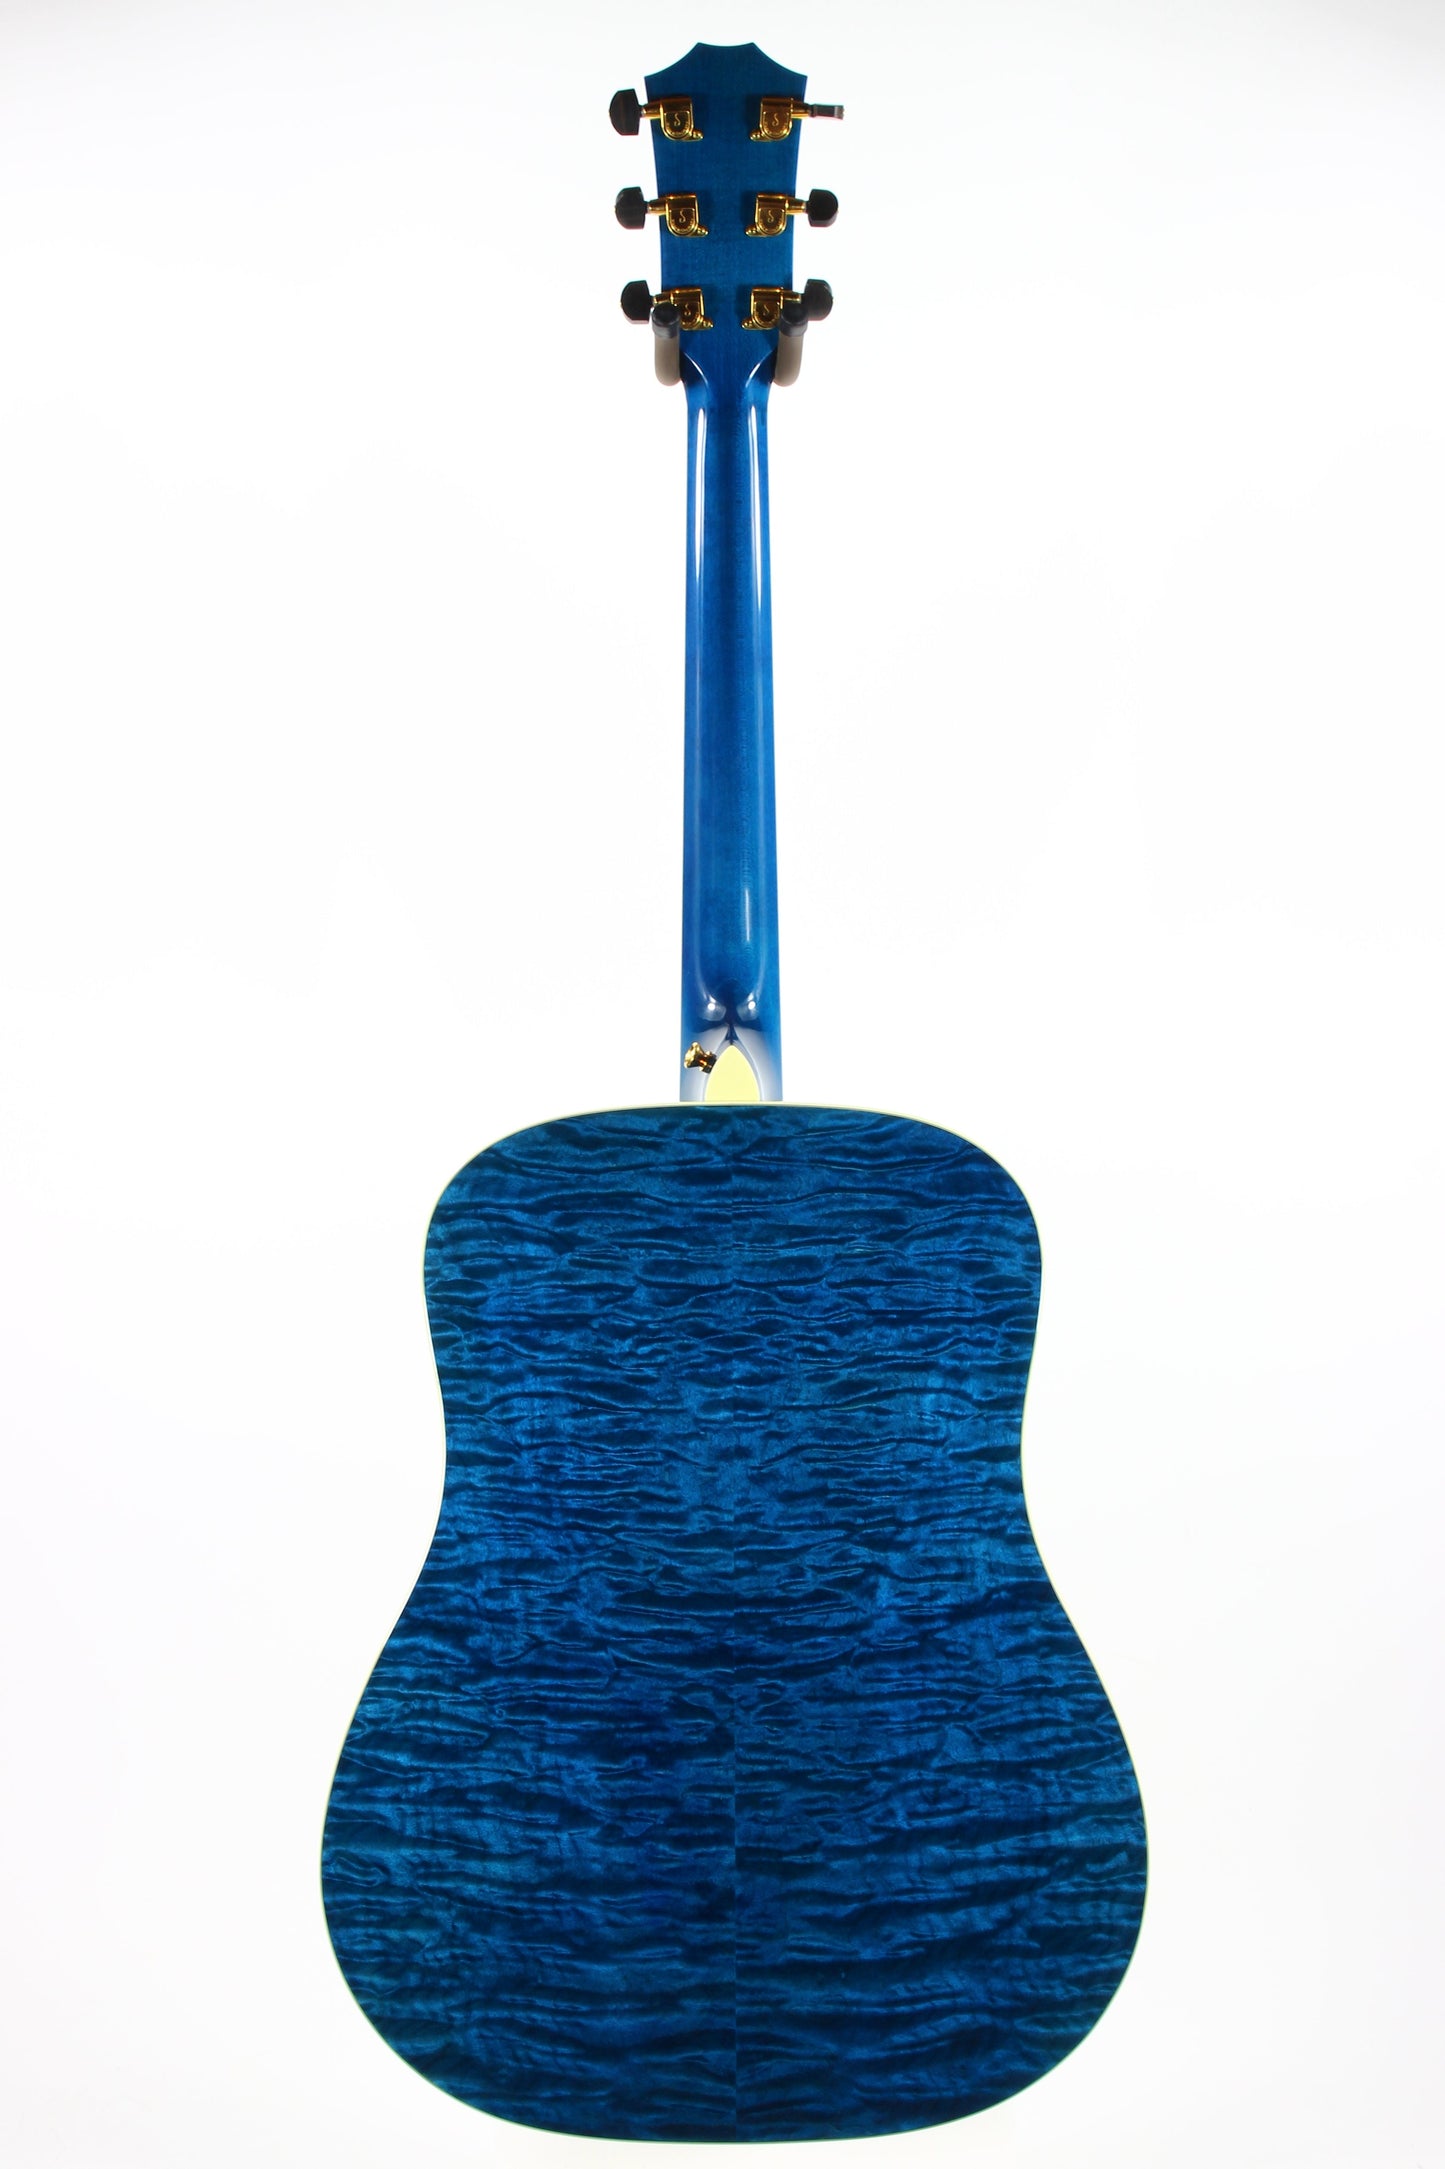 2000 TAYLOR SWIFT KOI Fish Living Jewels GSLJ Aqua Blue Dreadnought Acoustic Guitar Bearclaw Quilt - RARE!